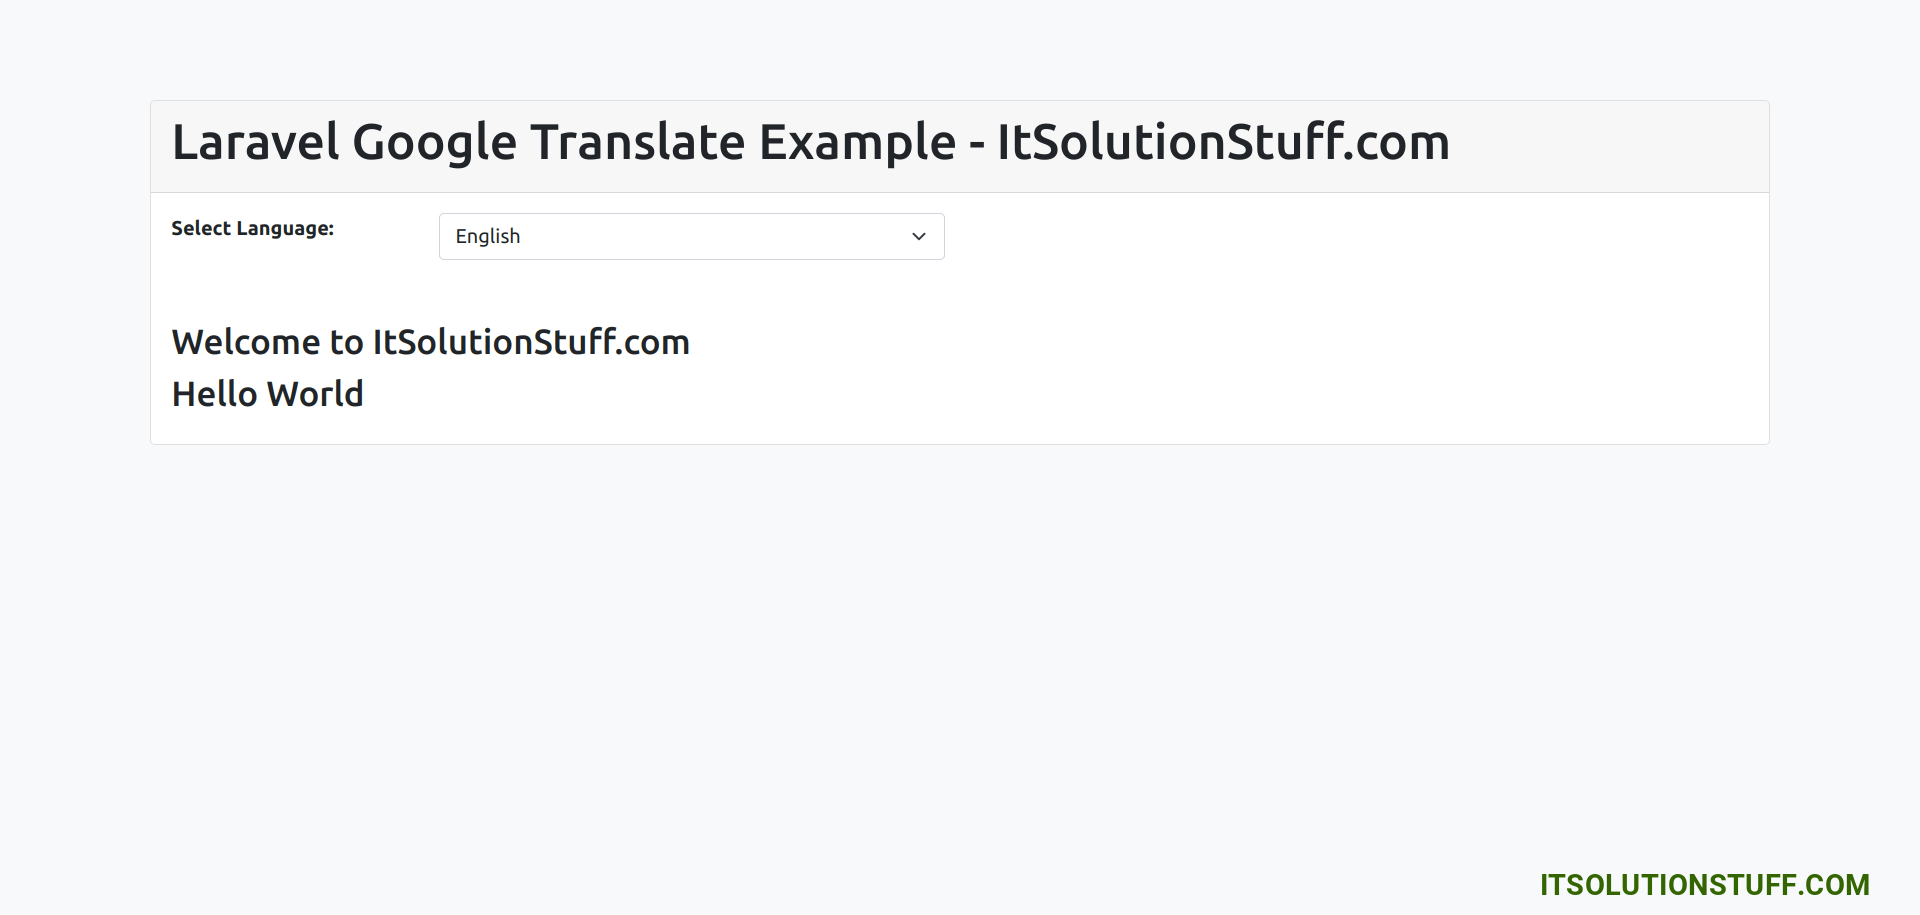 How to Use Google Translator in Laravel?